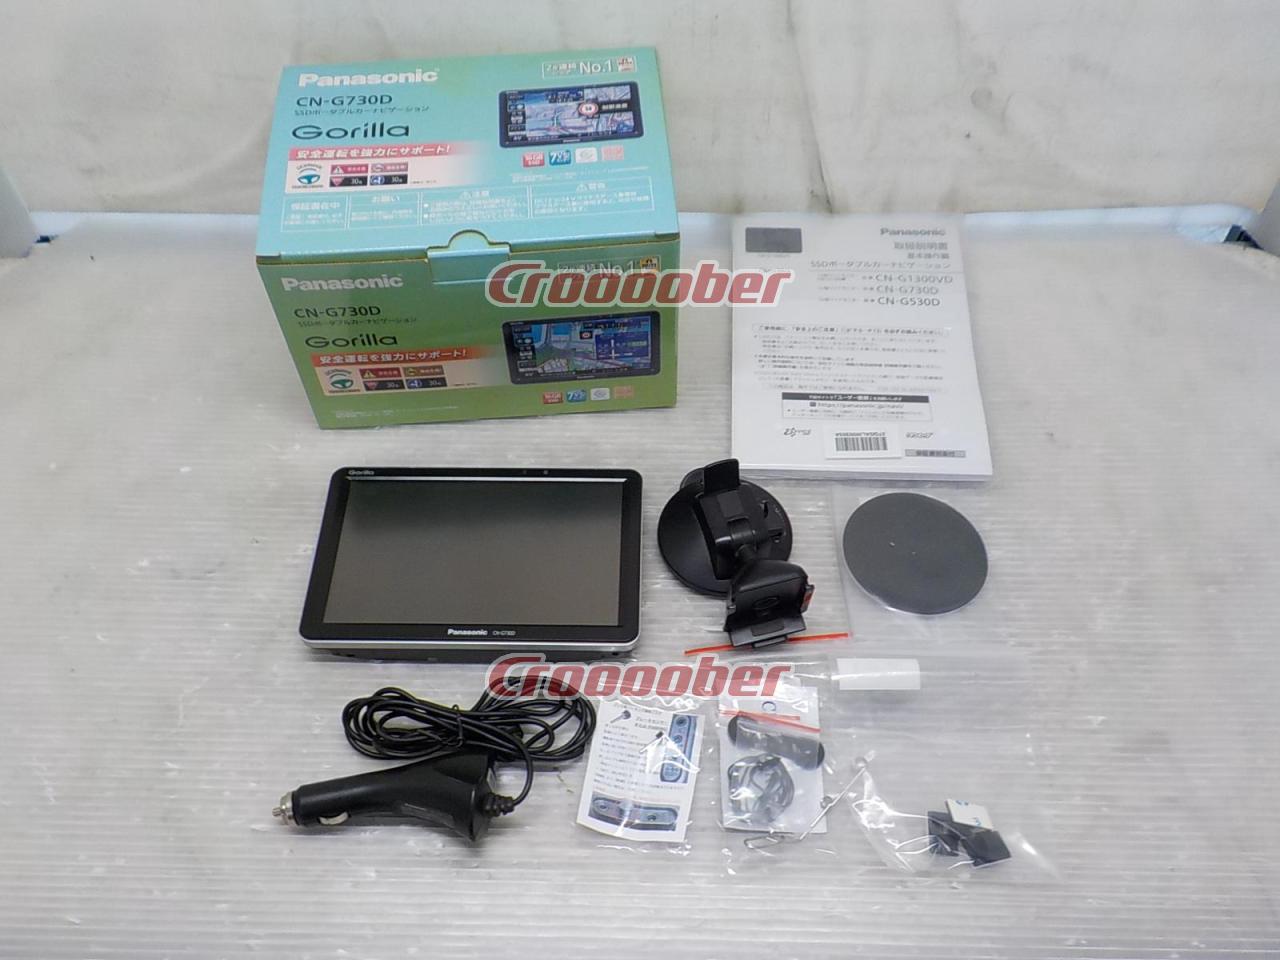 Panasonic Gorilla CN-G730D | Portable Navigation(digital) | Croooober